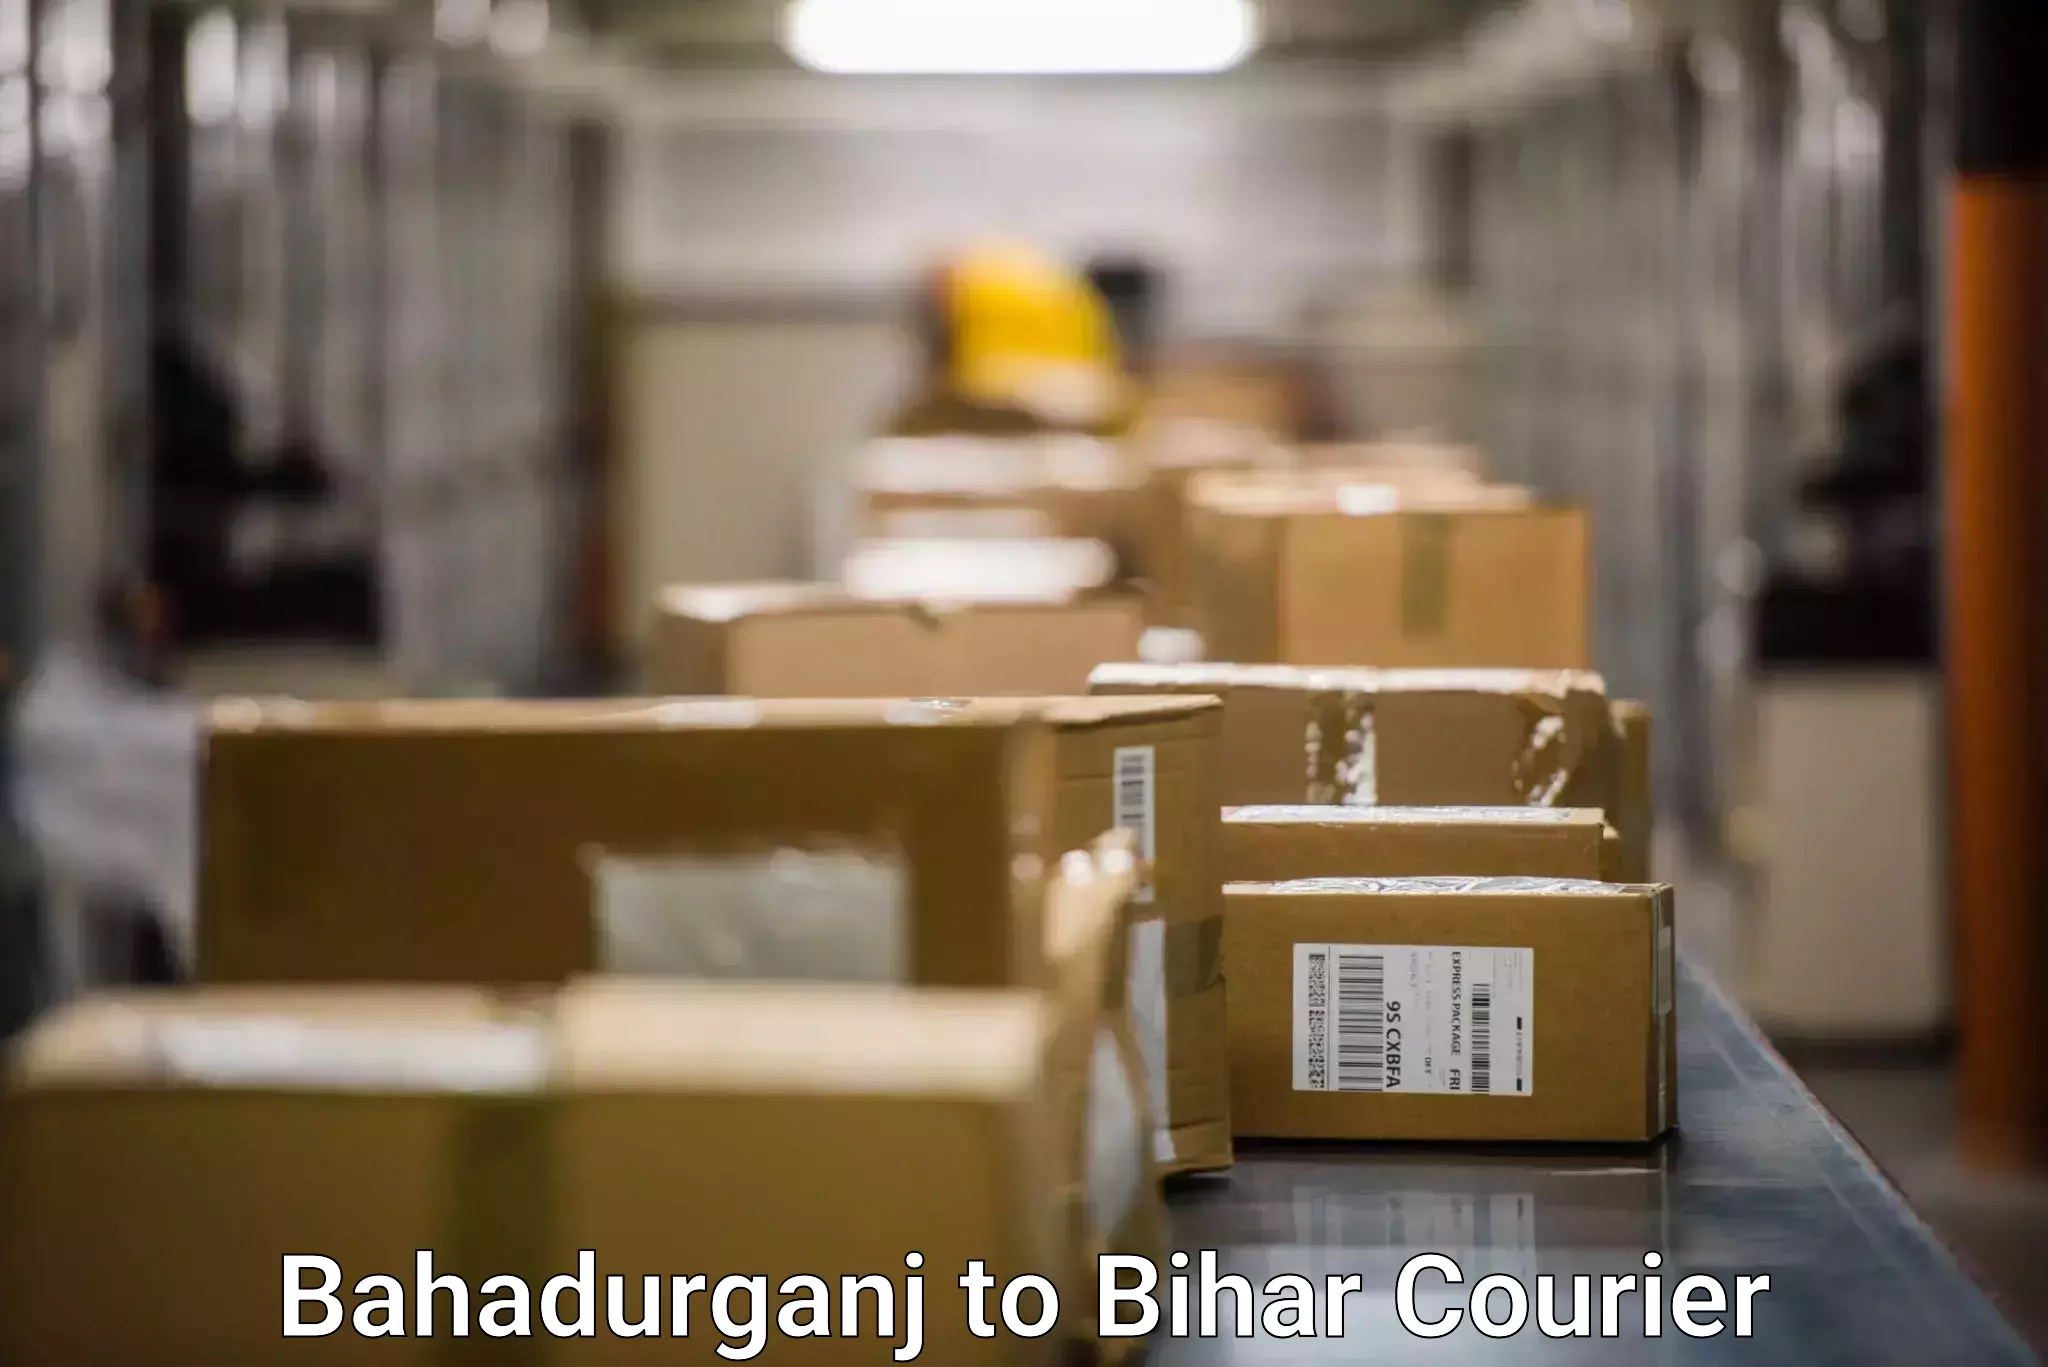 User-friendly courier app Bahadurganj to Jhanjharpur